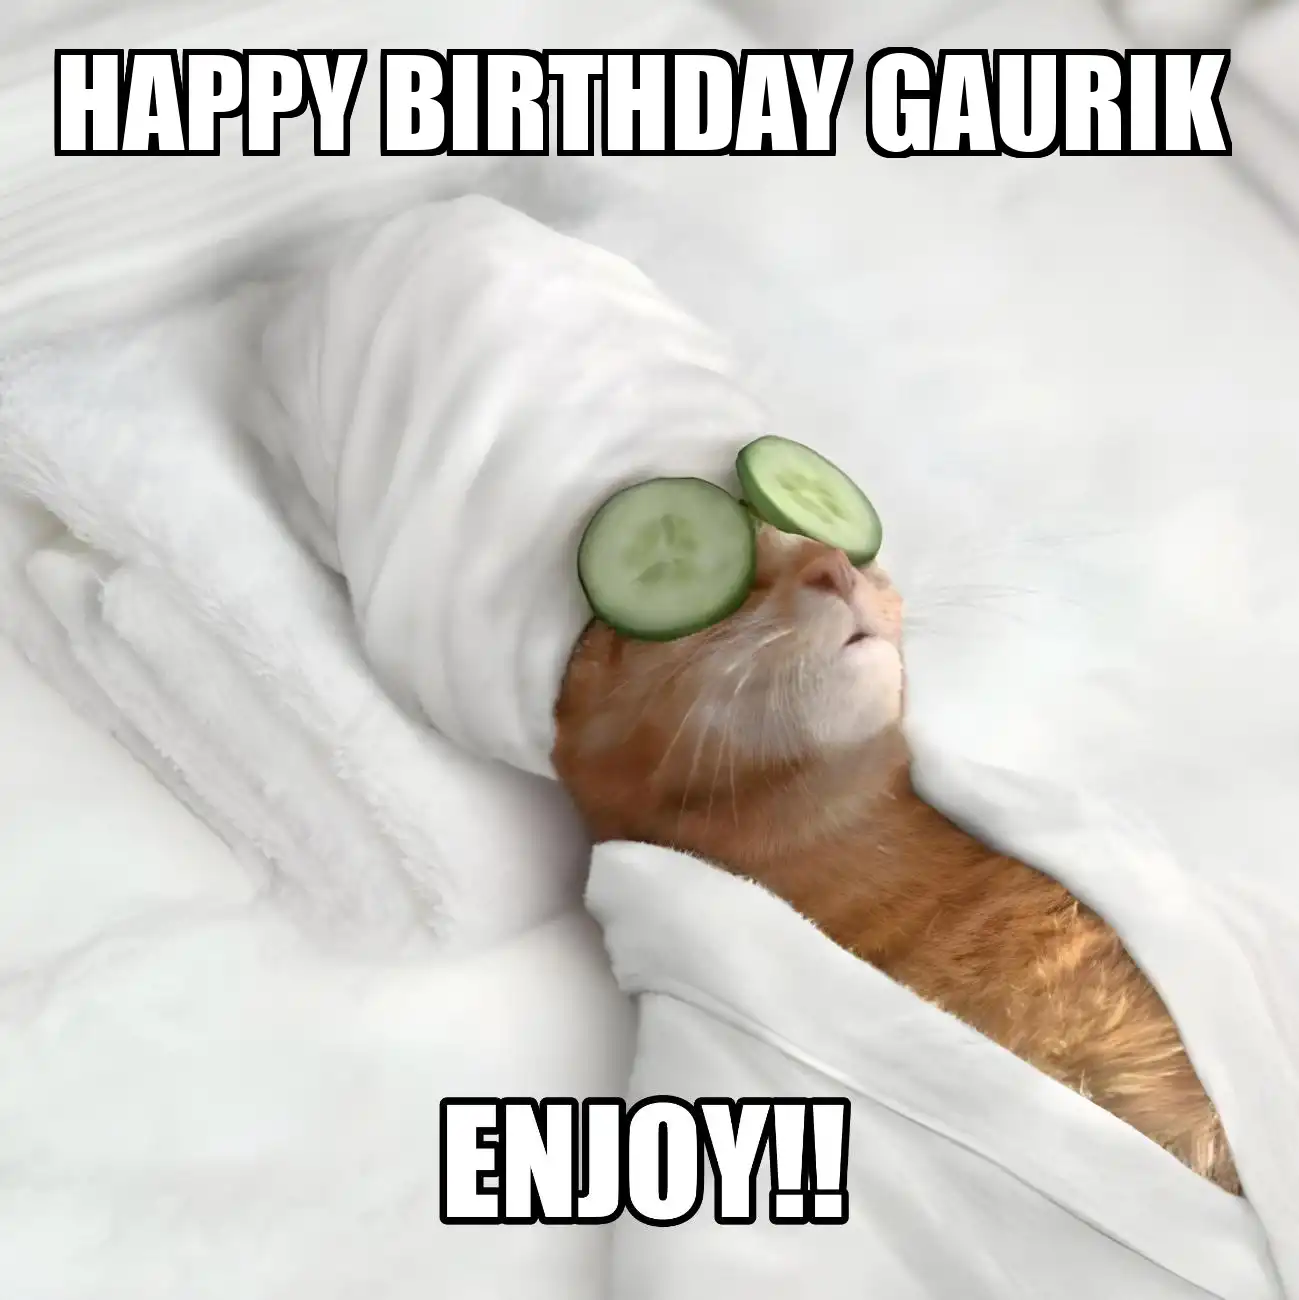 Happy Birthday Gaurik Enjoy Cat Meme